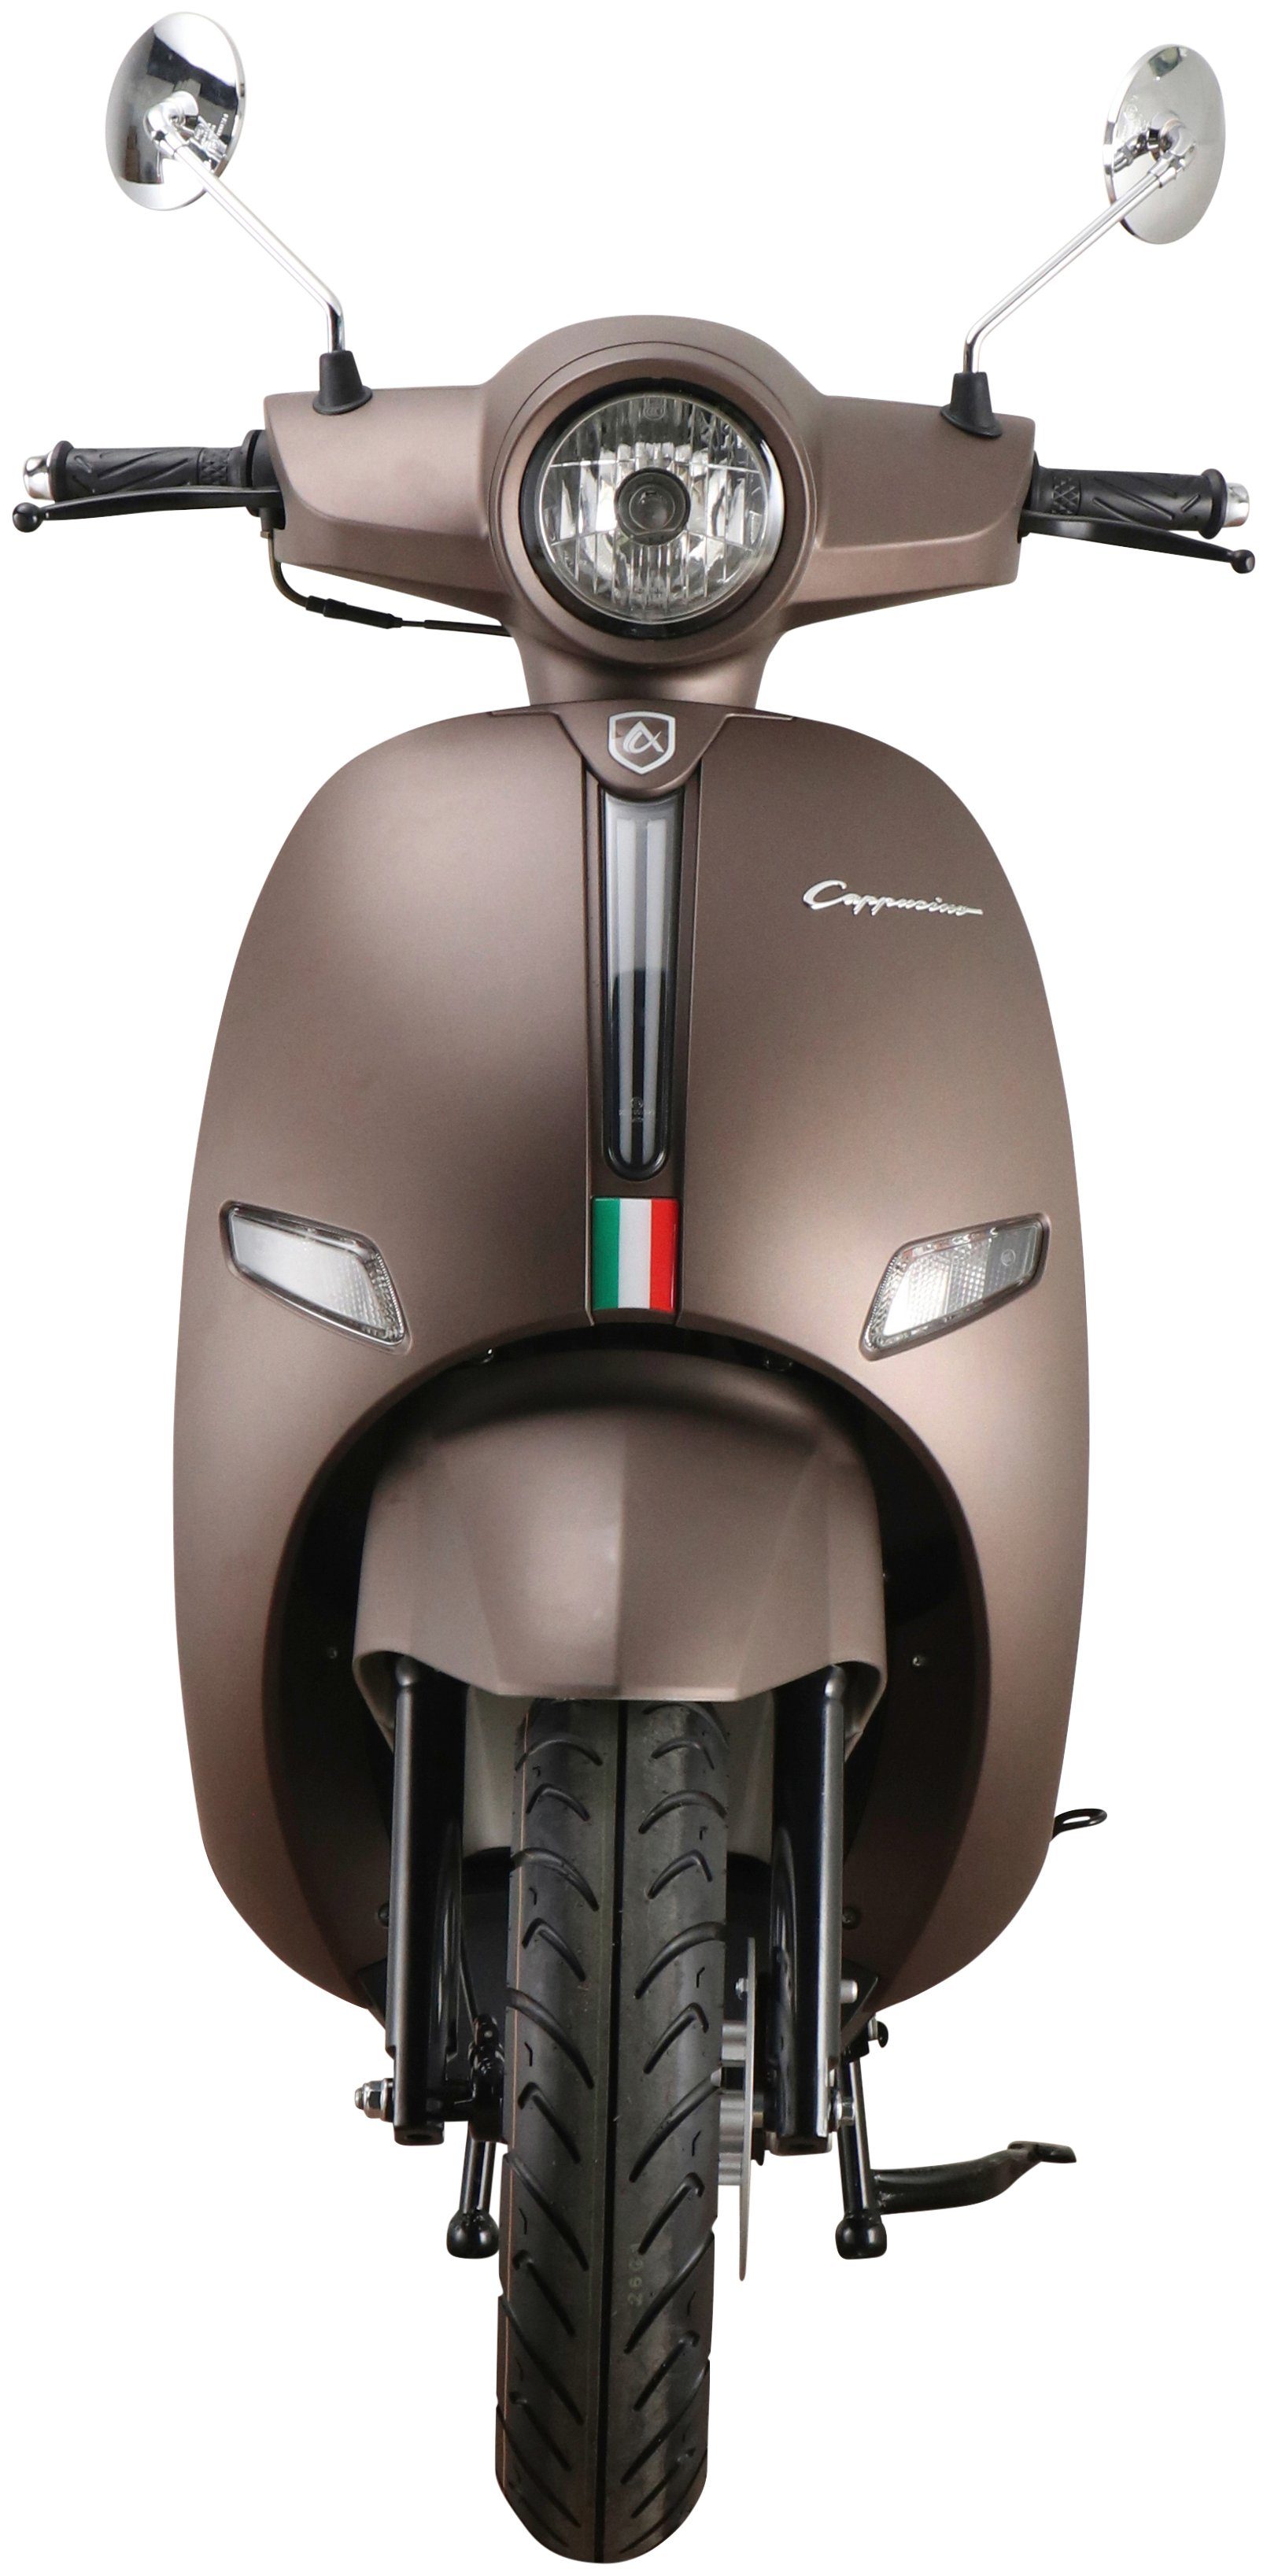 ccm, 125 Alpha Motorroller Euro 5 Motors km/h, 85 Cappucino,